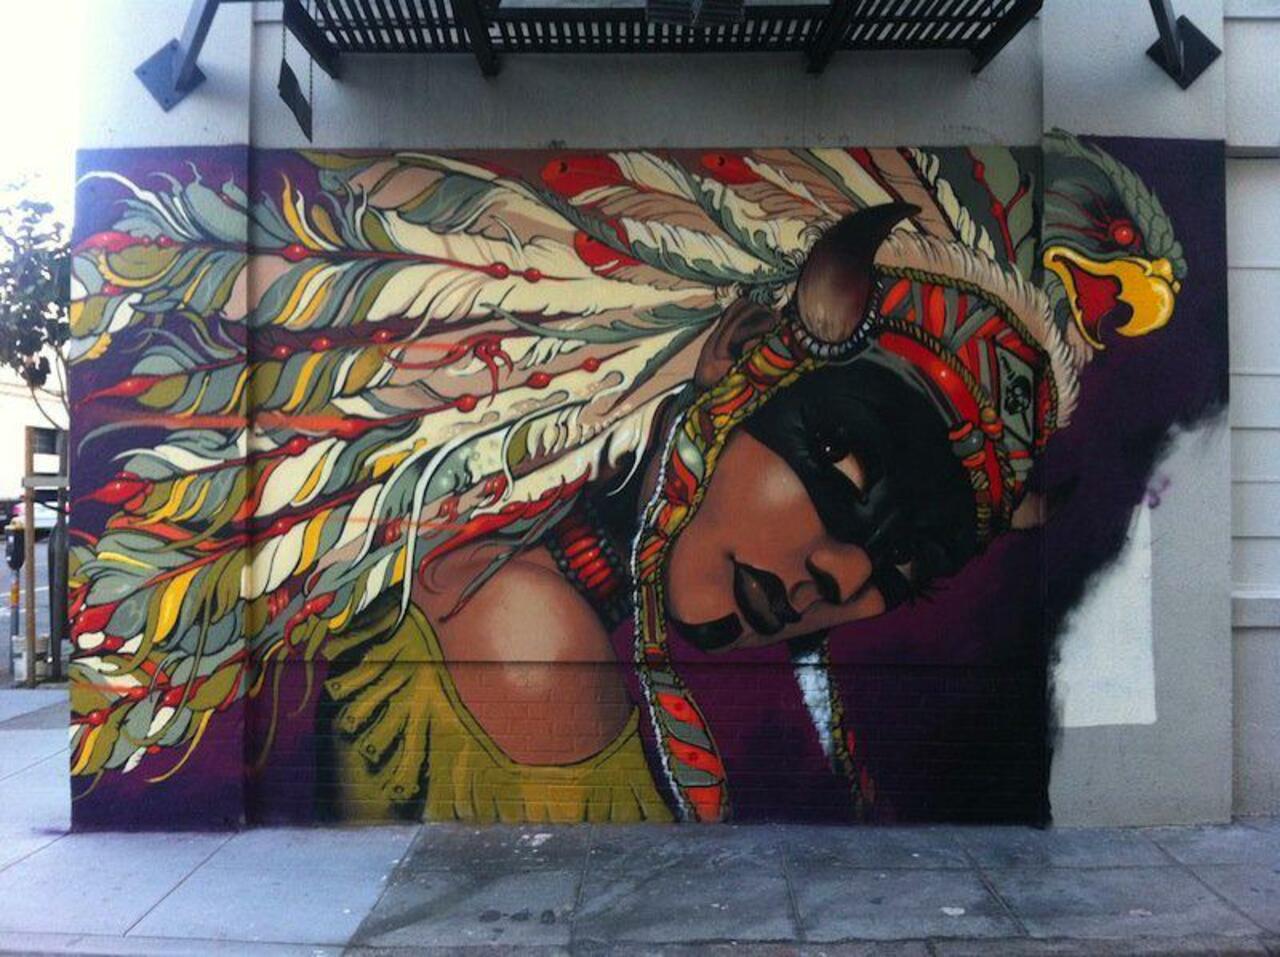 RT @DanielGennaoui: War bonnet. Find more amazing #graffiti in our gallery: http://bit.ly/1GPAOAT #mural #art http://t.co/AHY7qLza1u